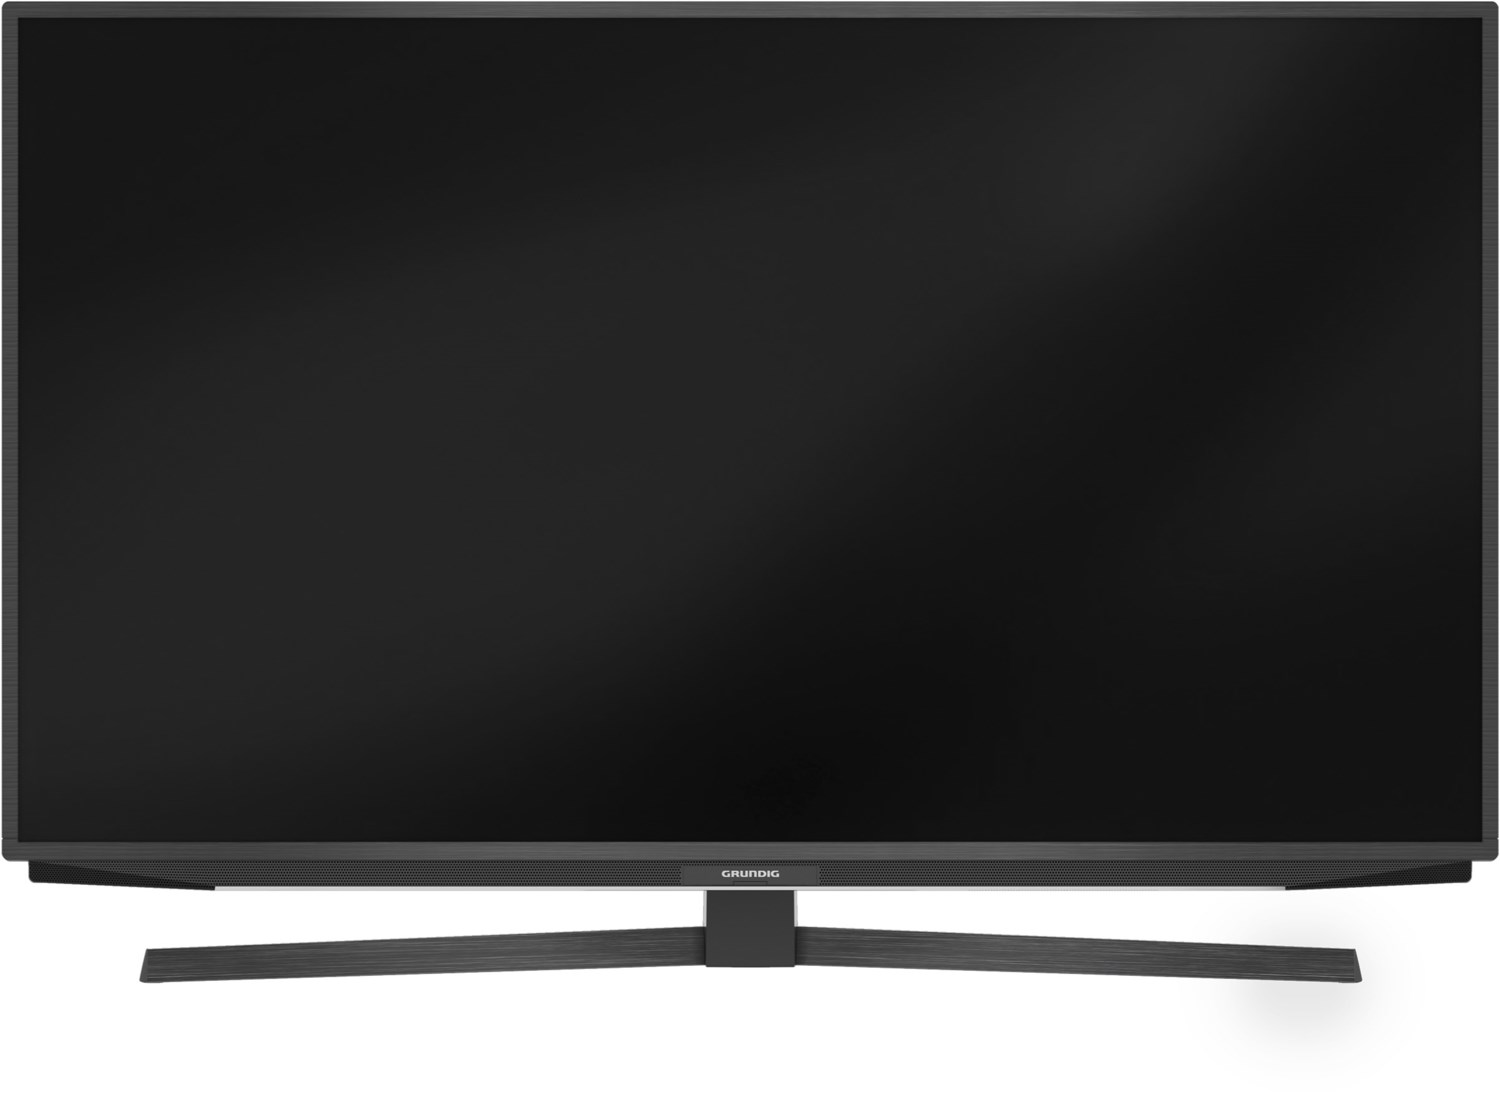 Grundig 50 GUT 7150 Hamburg LCD-TV mit LED-Technik Fire TV Edition UHD 126 cm (50 Zoll) anthrazit